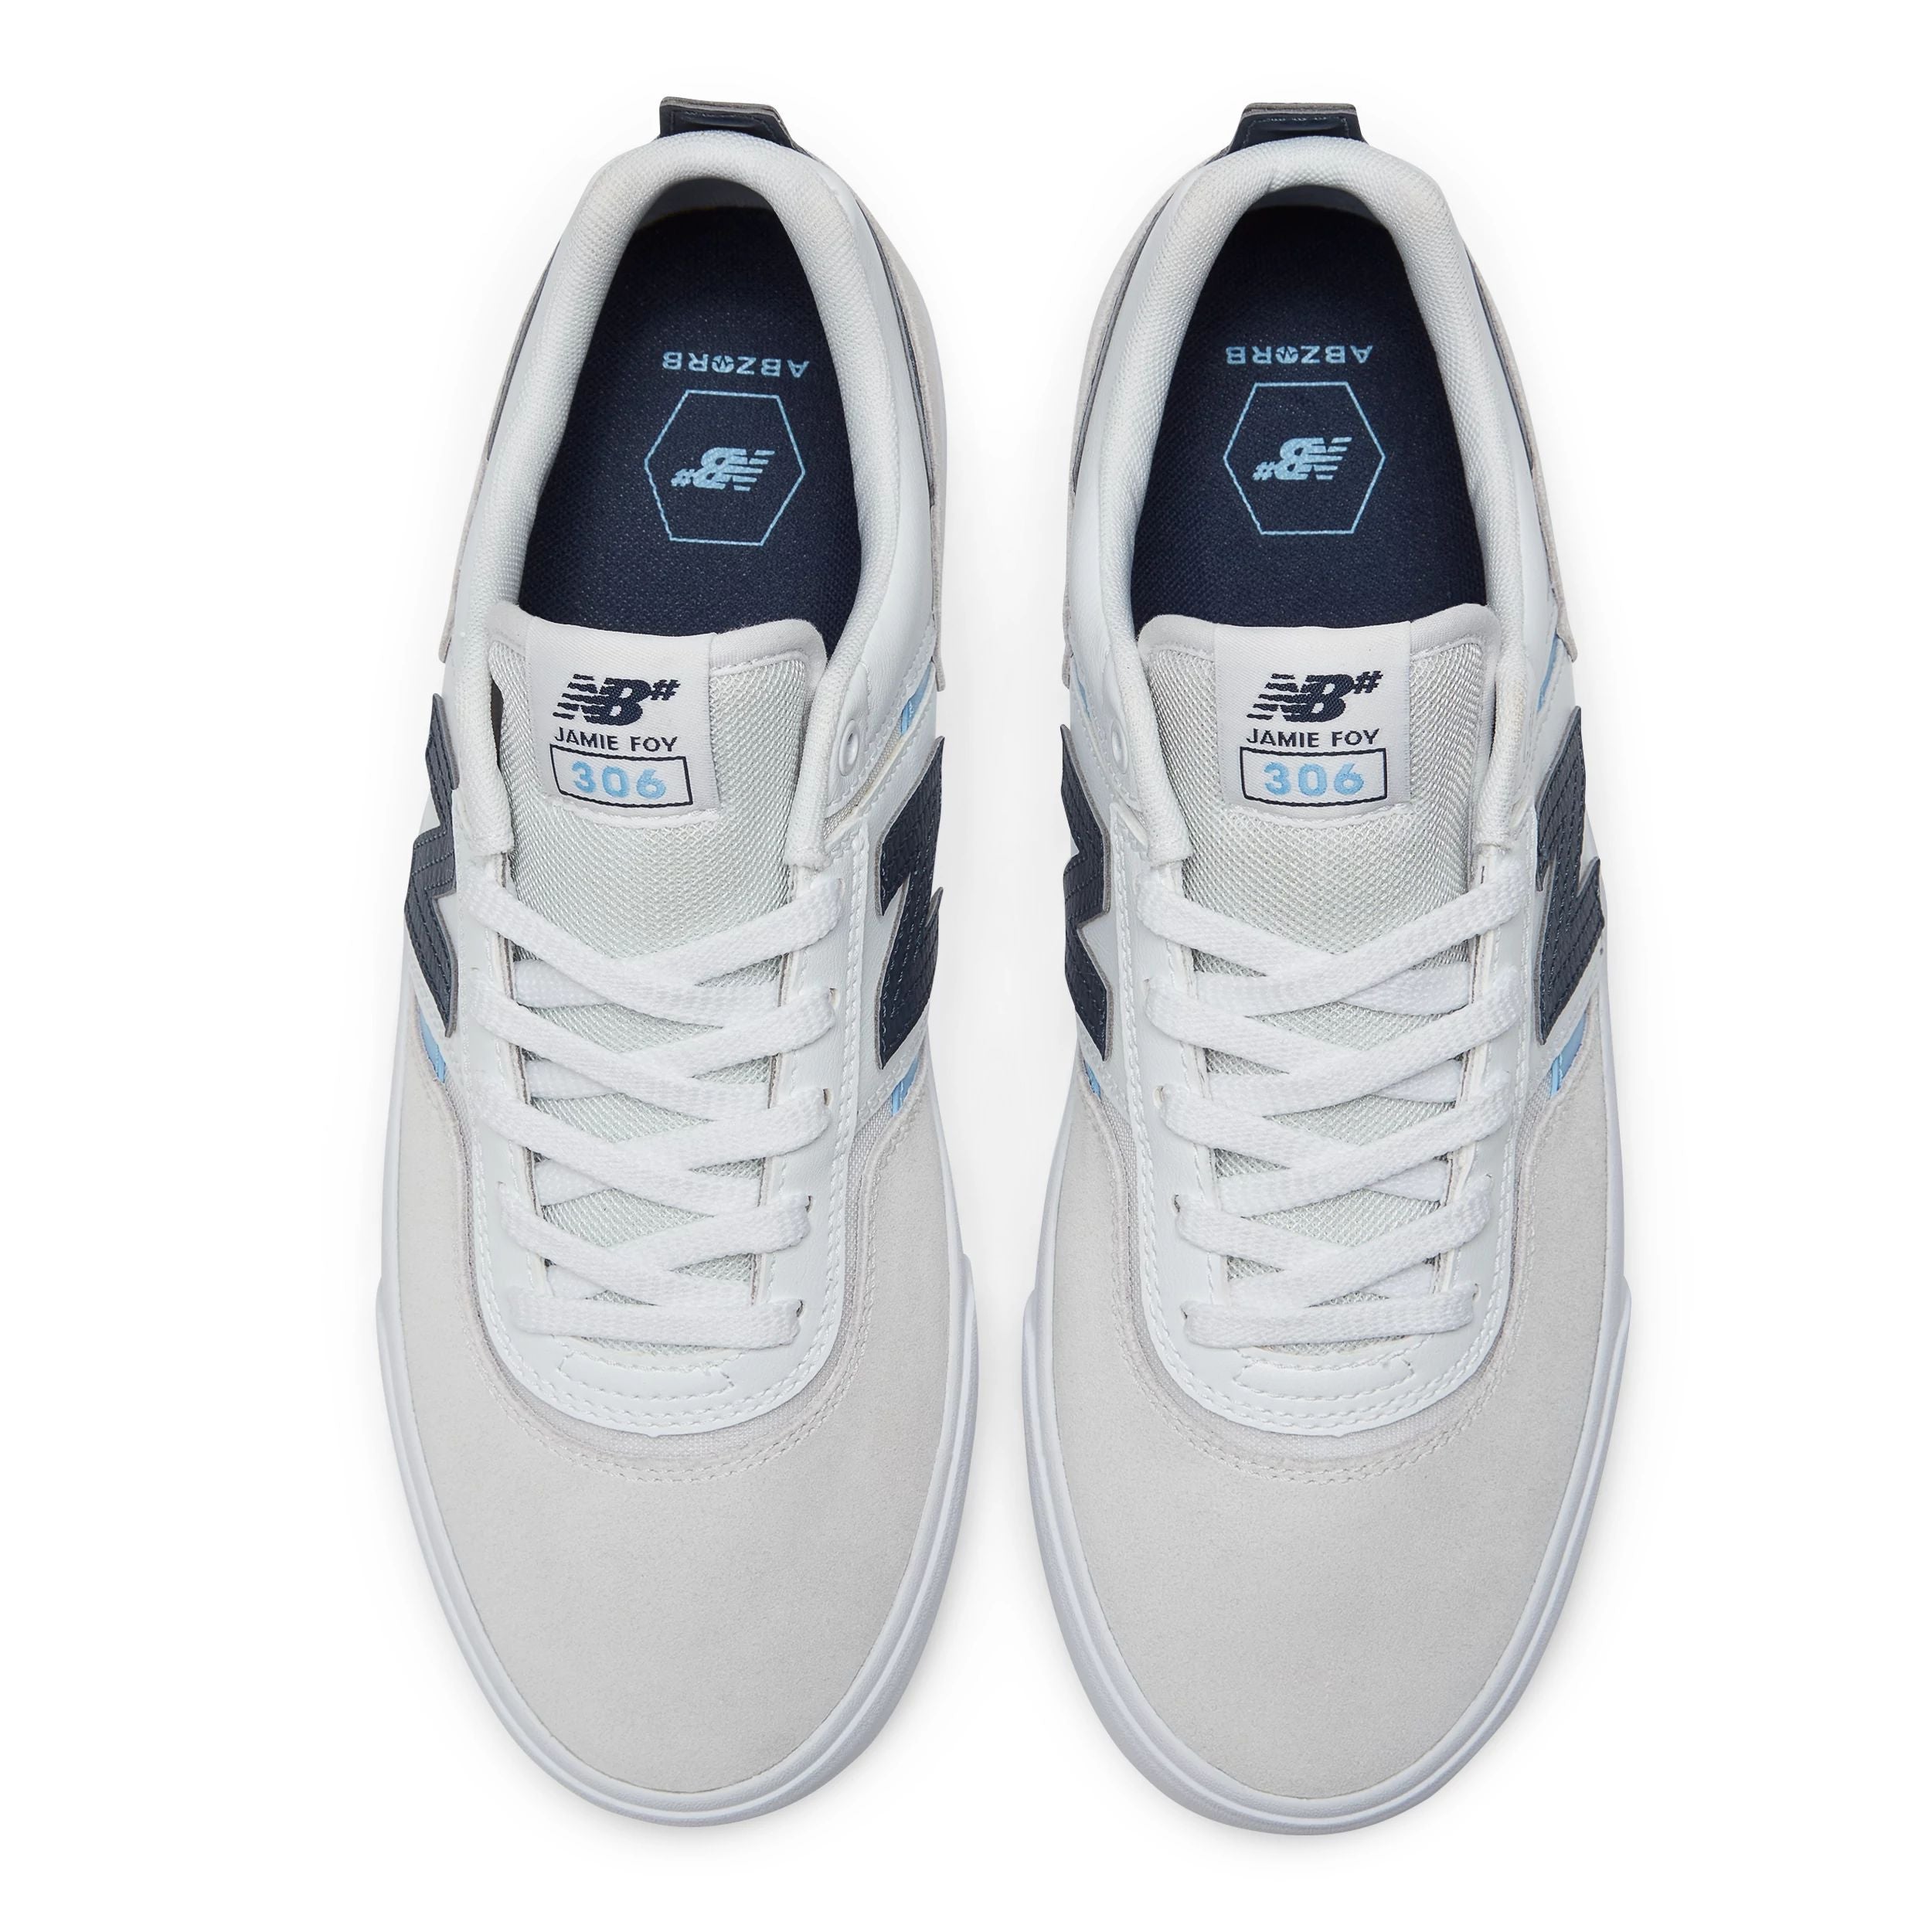 White/Navy NM306 Jamie Foy NB Numeric Skate Shoe Top